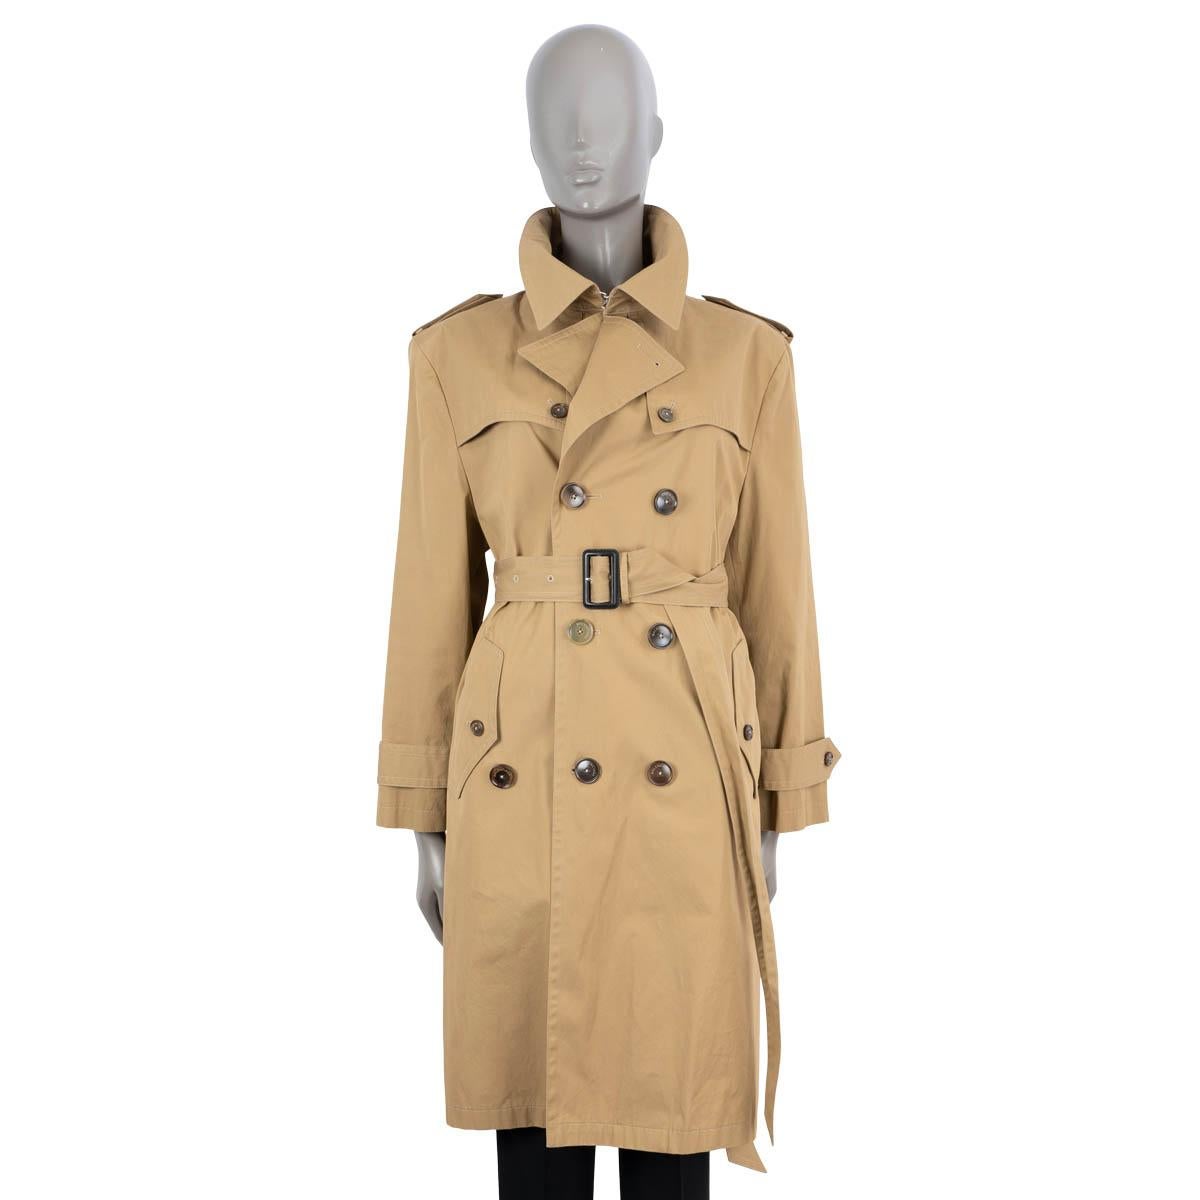 Beige BALENCIAGA tan cotton 2016 SWING TRENCH Coat Jacket 40 M